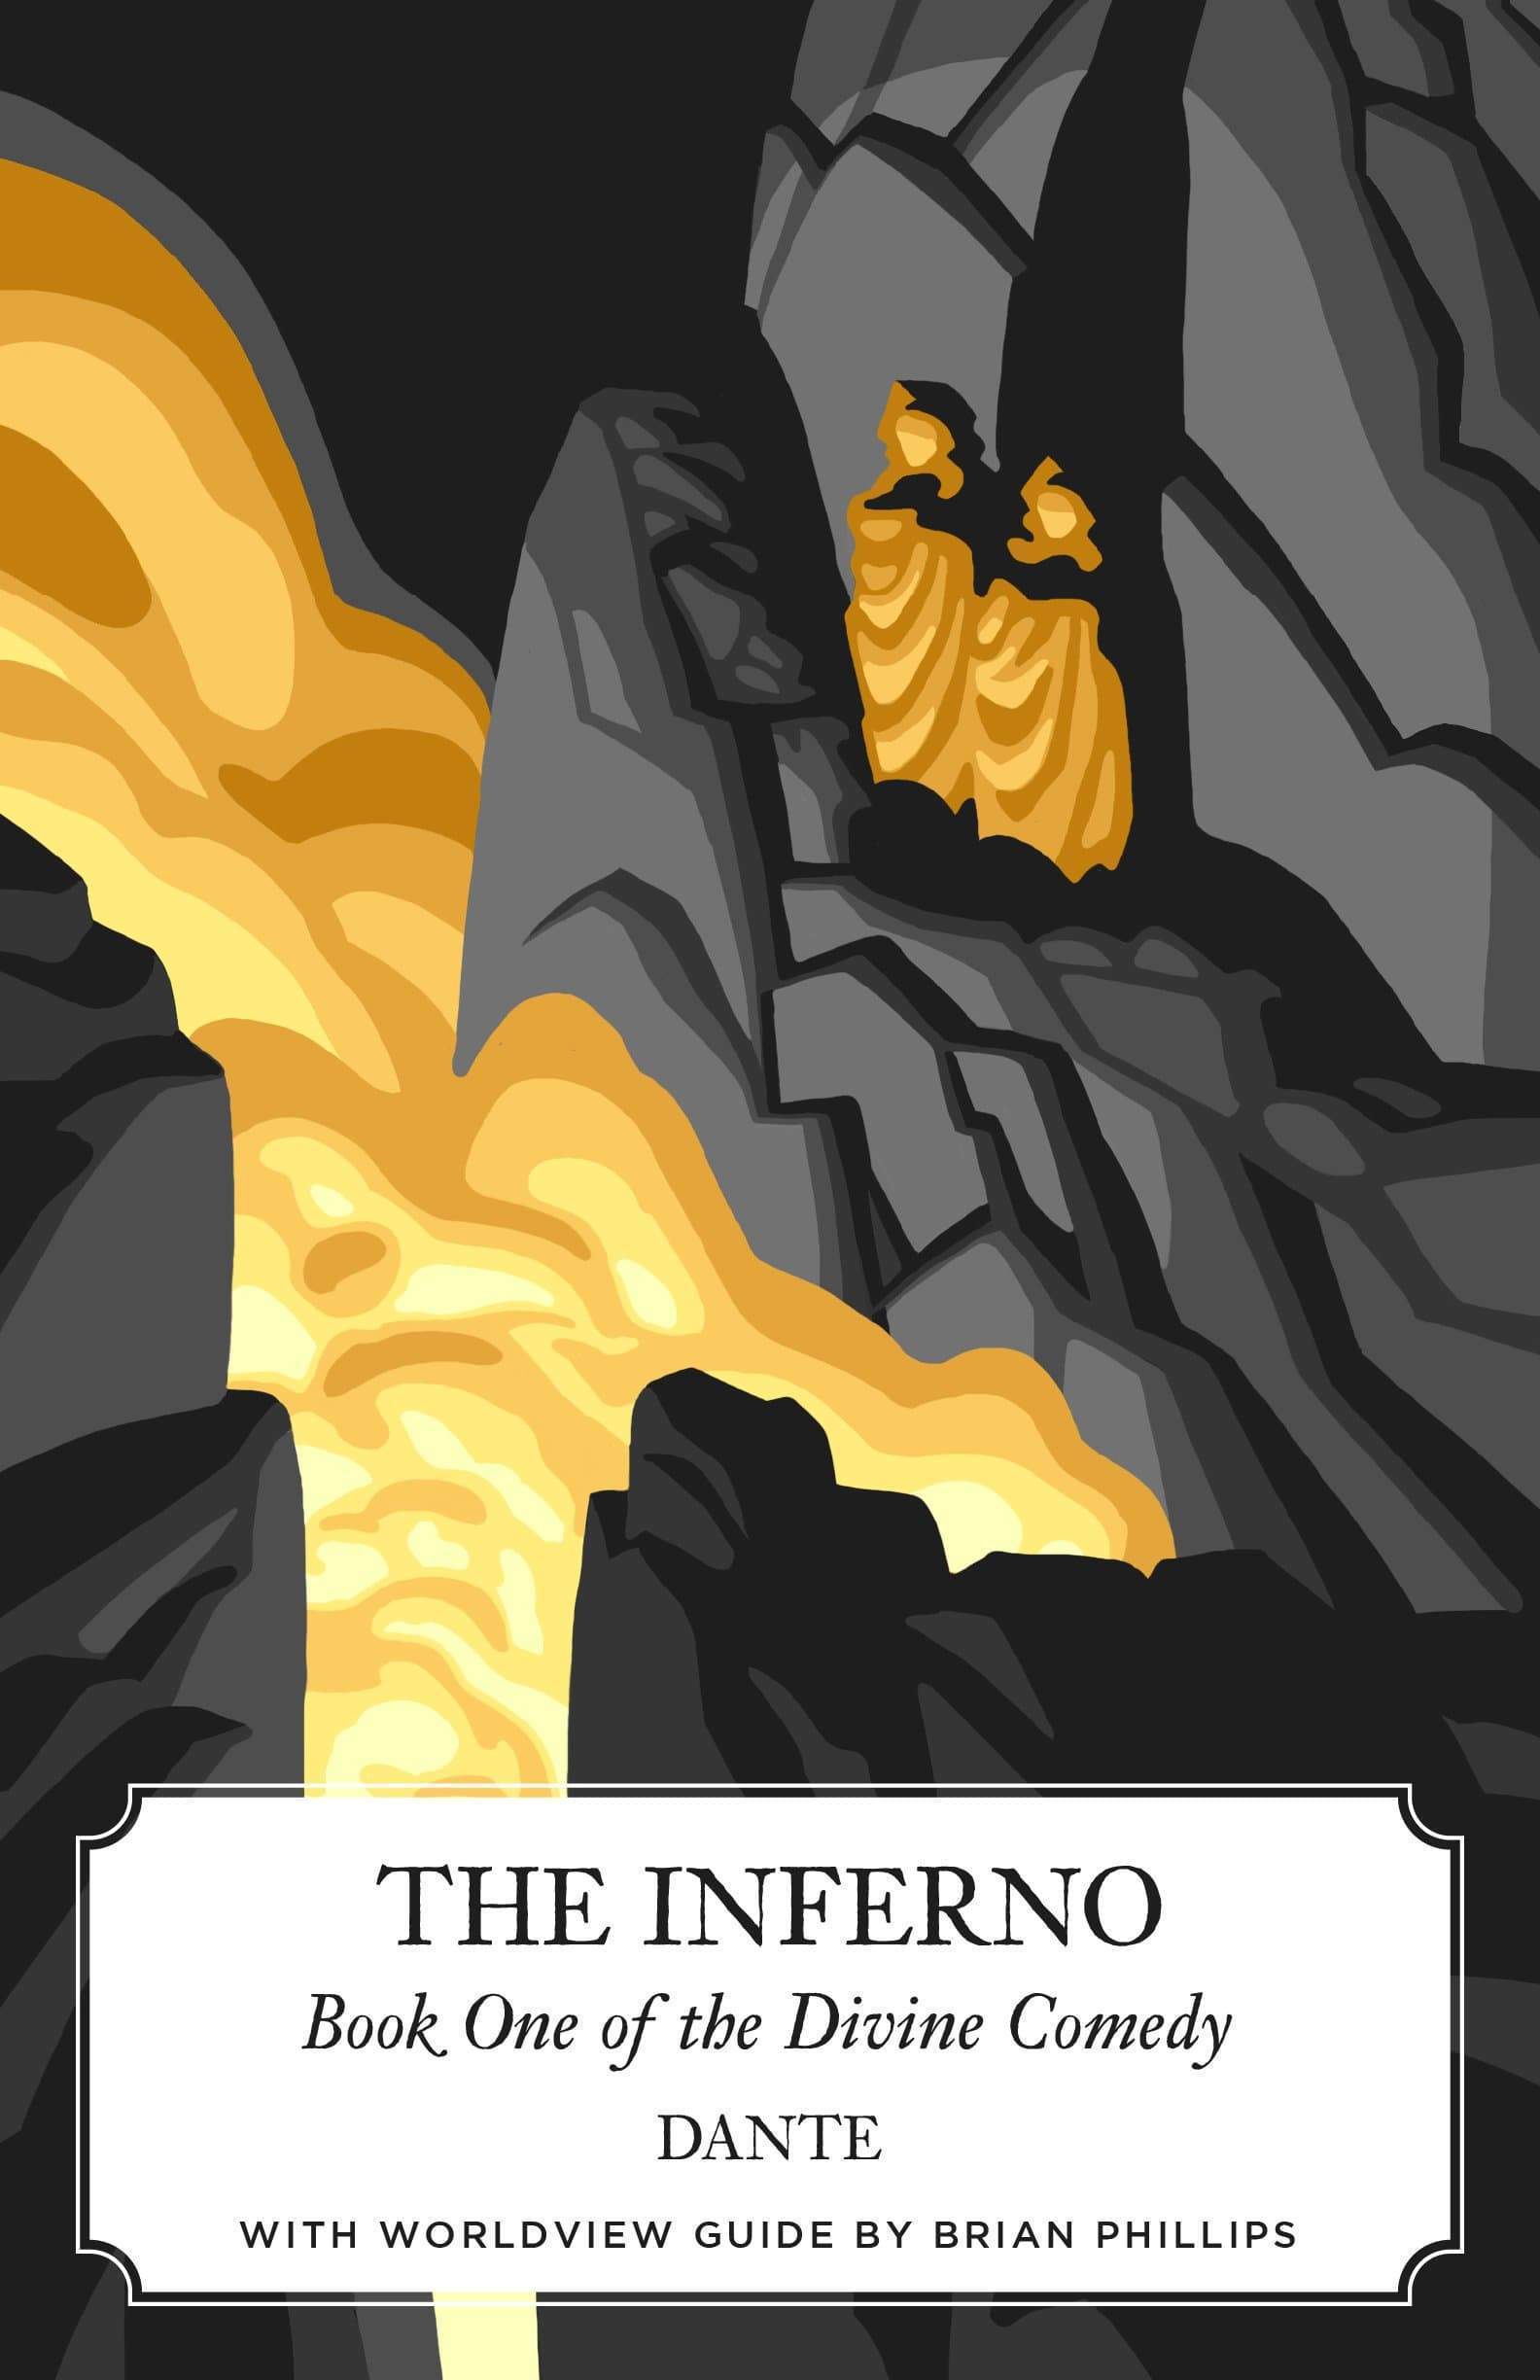 Page 2, Dante's Inferno